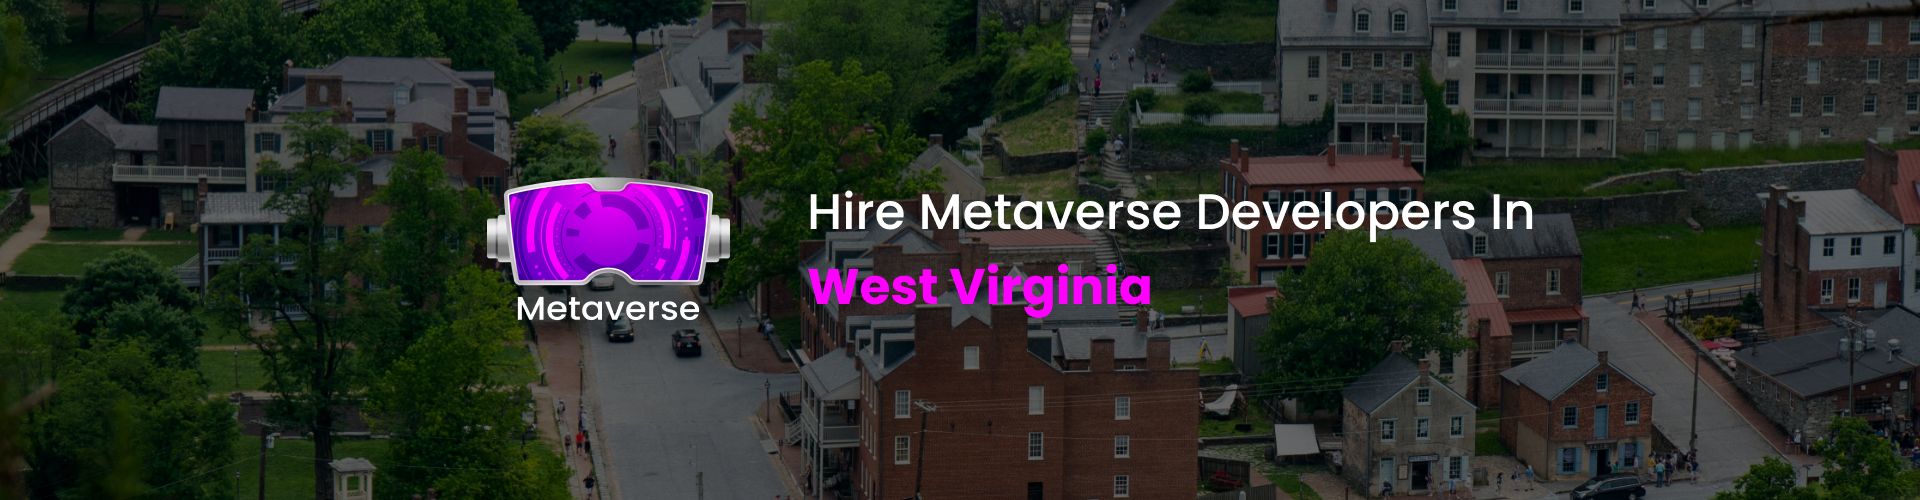 hire metaverse developers in west virginia